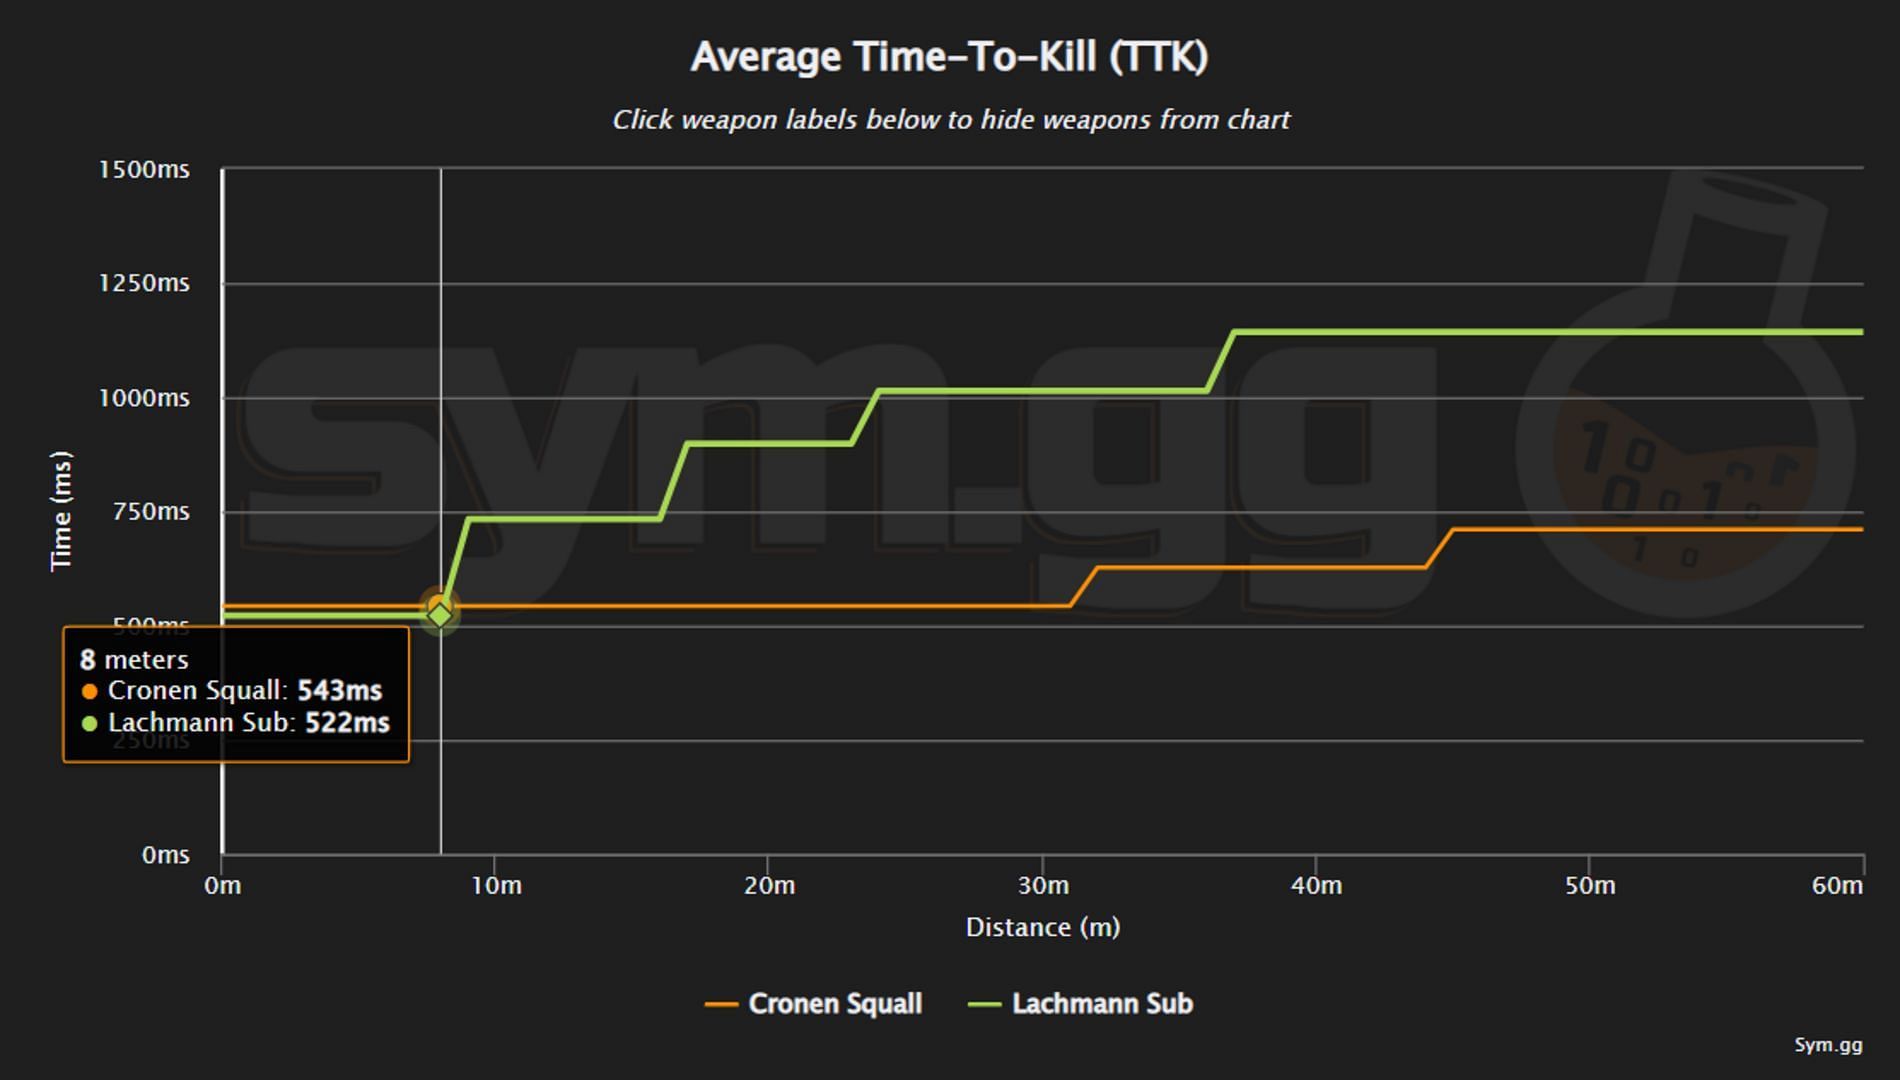 TTK comparison between Cronen Squall and Lachmann Sub (Image via sym.gg)